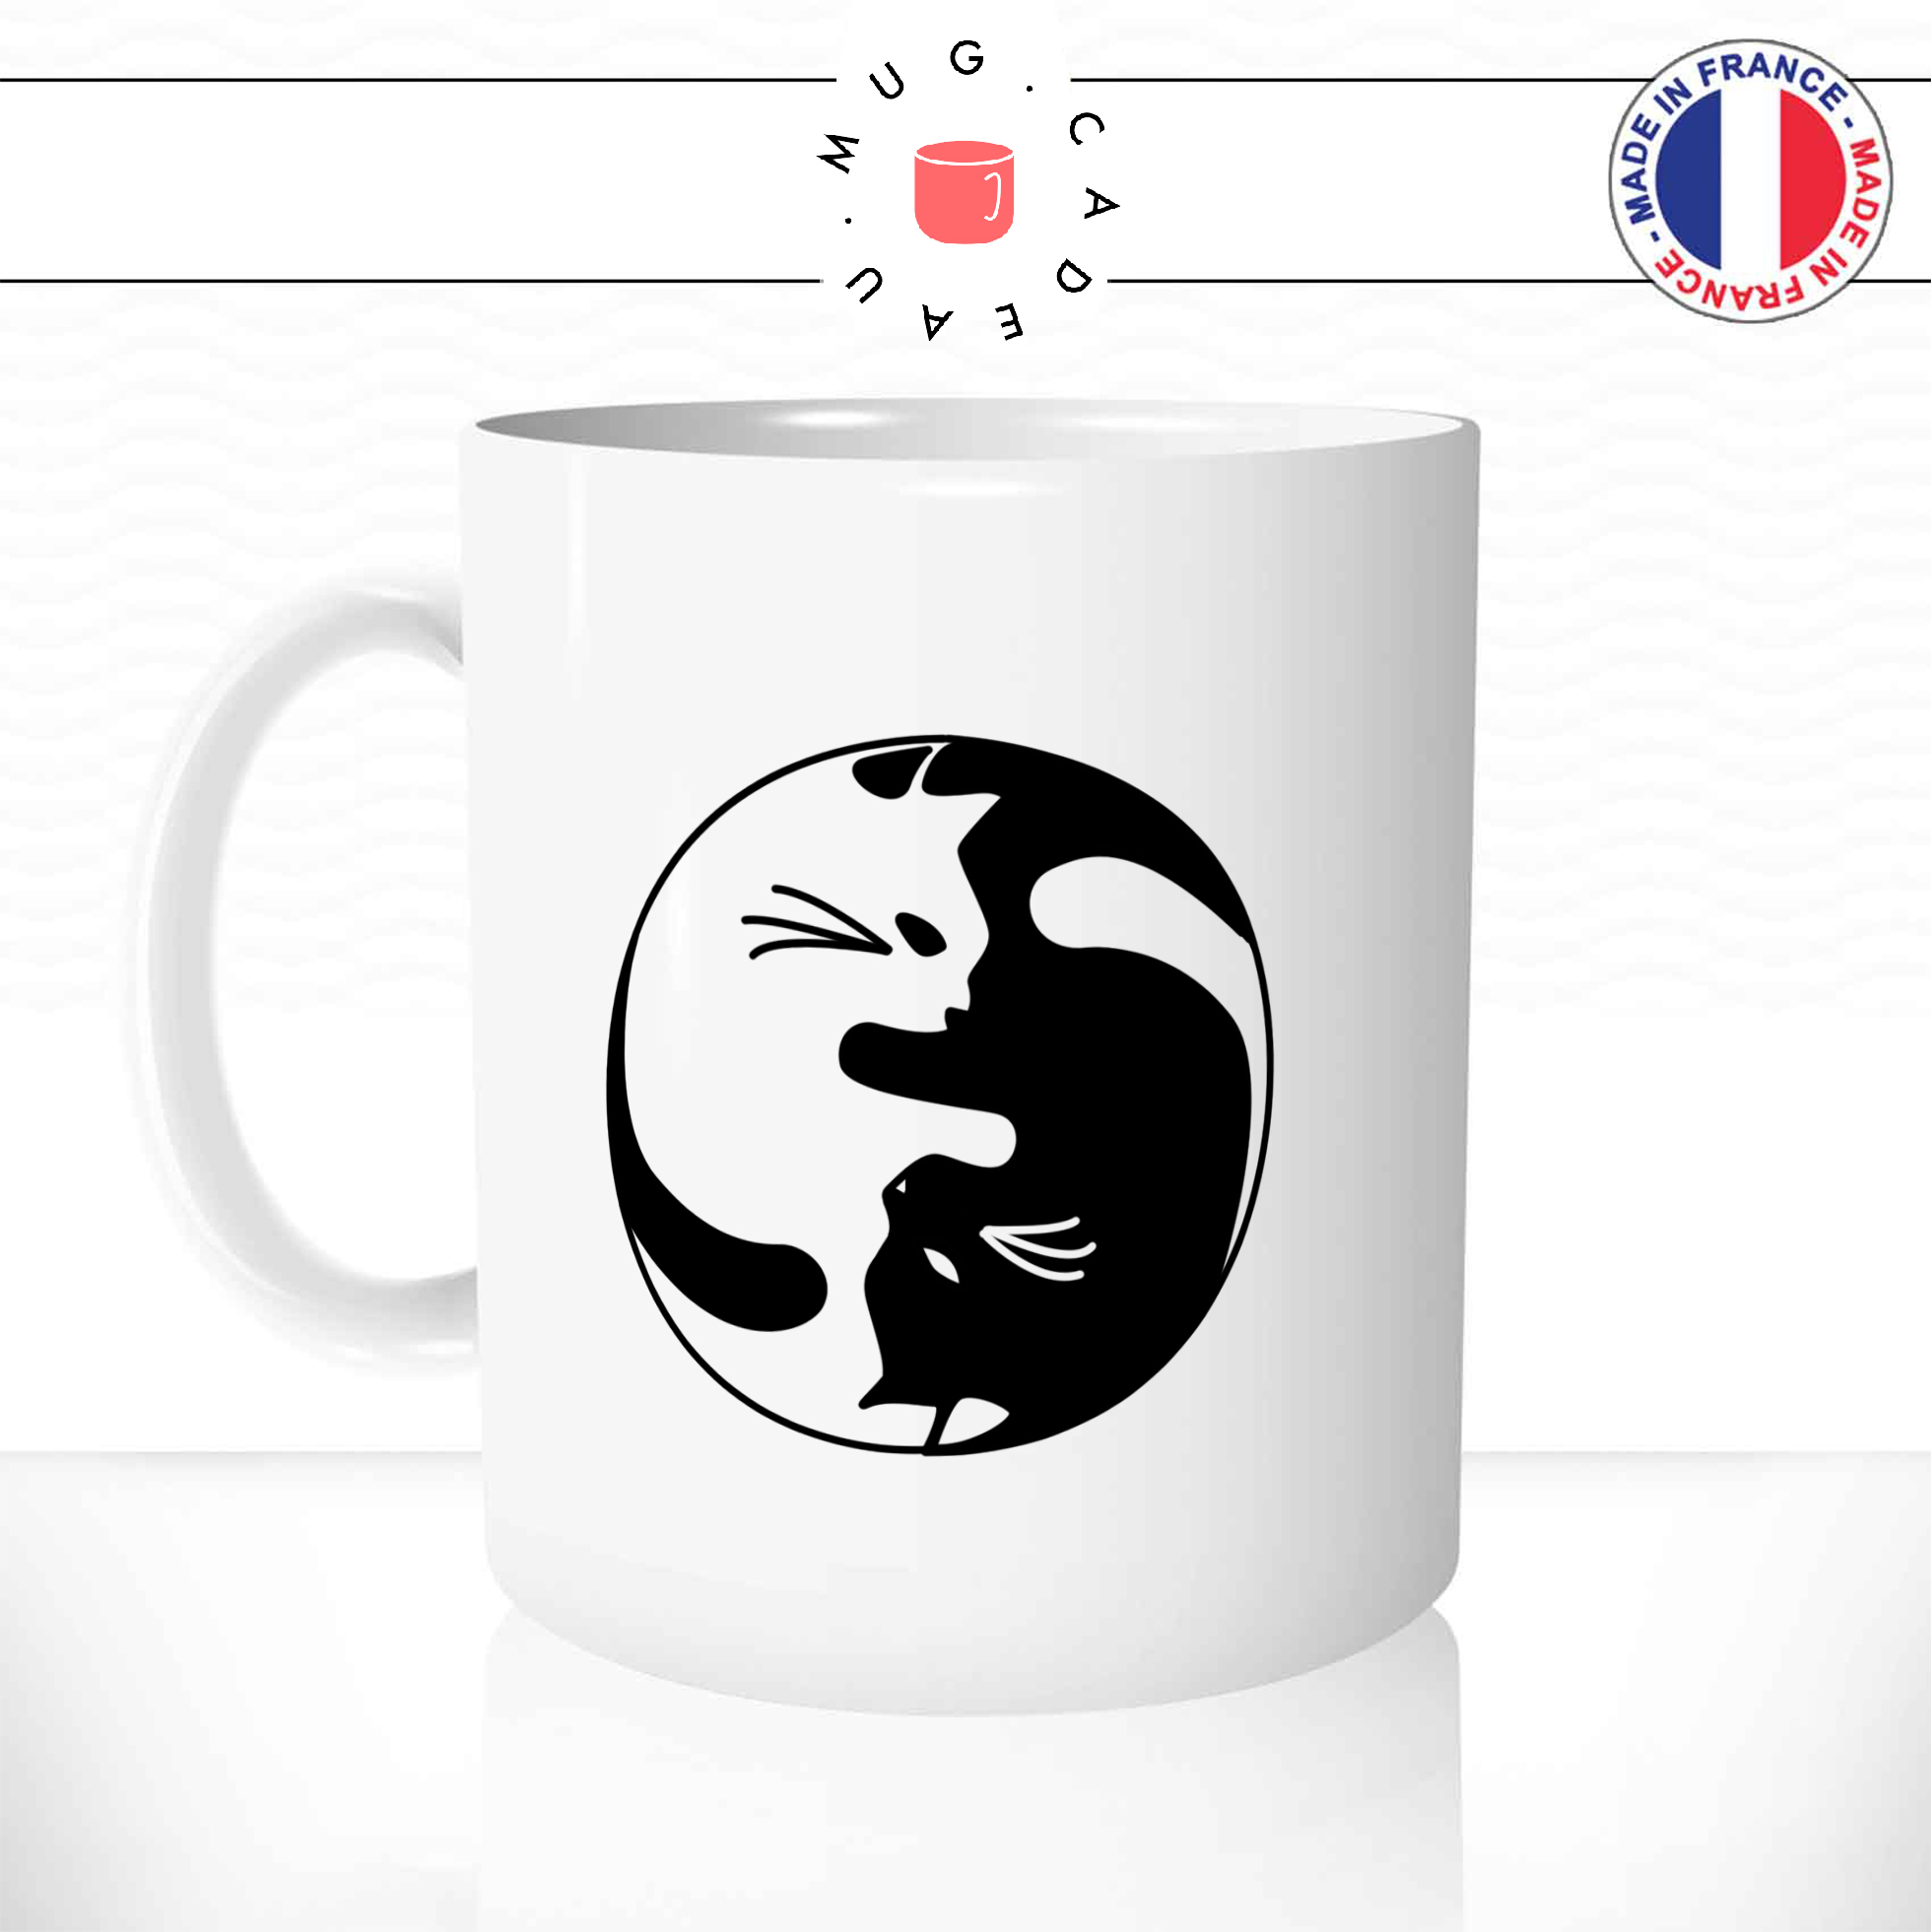 mug-tasse-ref30-chat-yin-yang-noir-blanc-mignon-calin-cafe-the-mugs-tasses-personnalise-anse-gauche